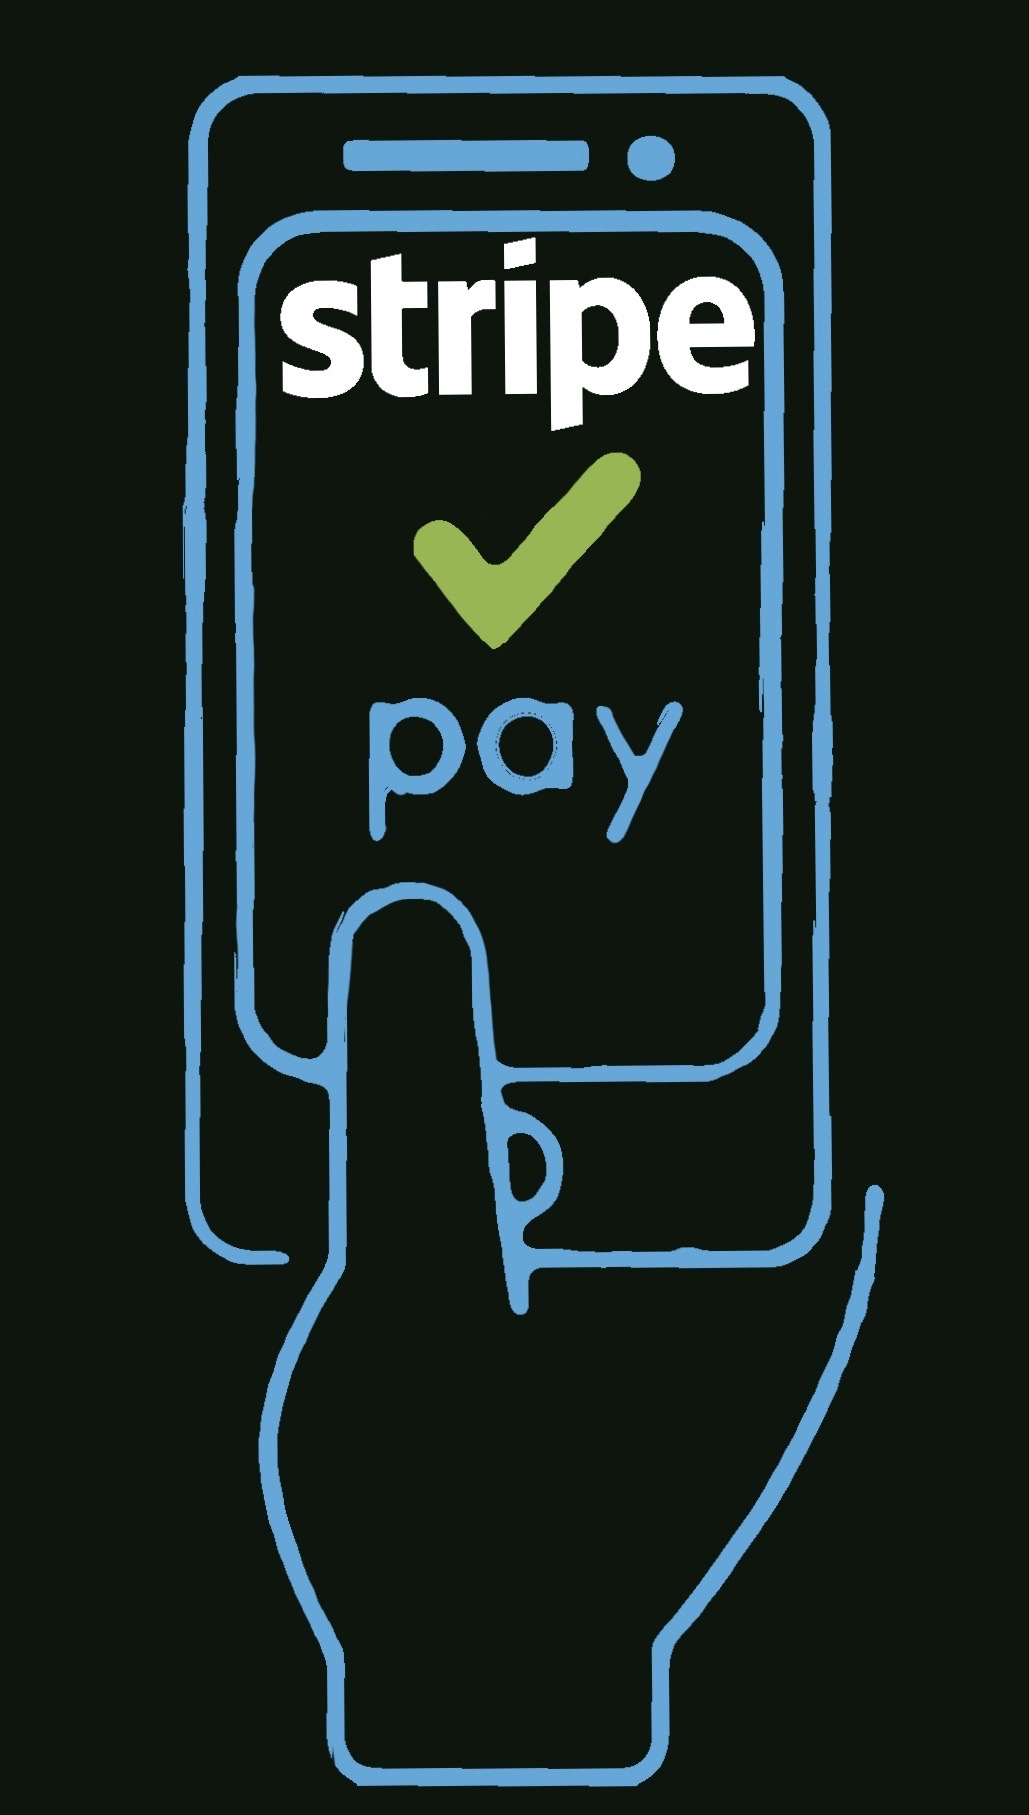 Stripe payment illustration